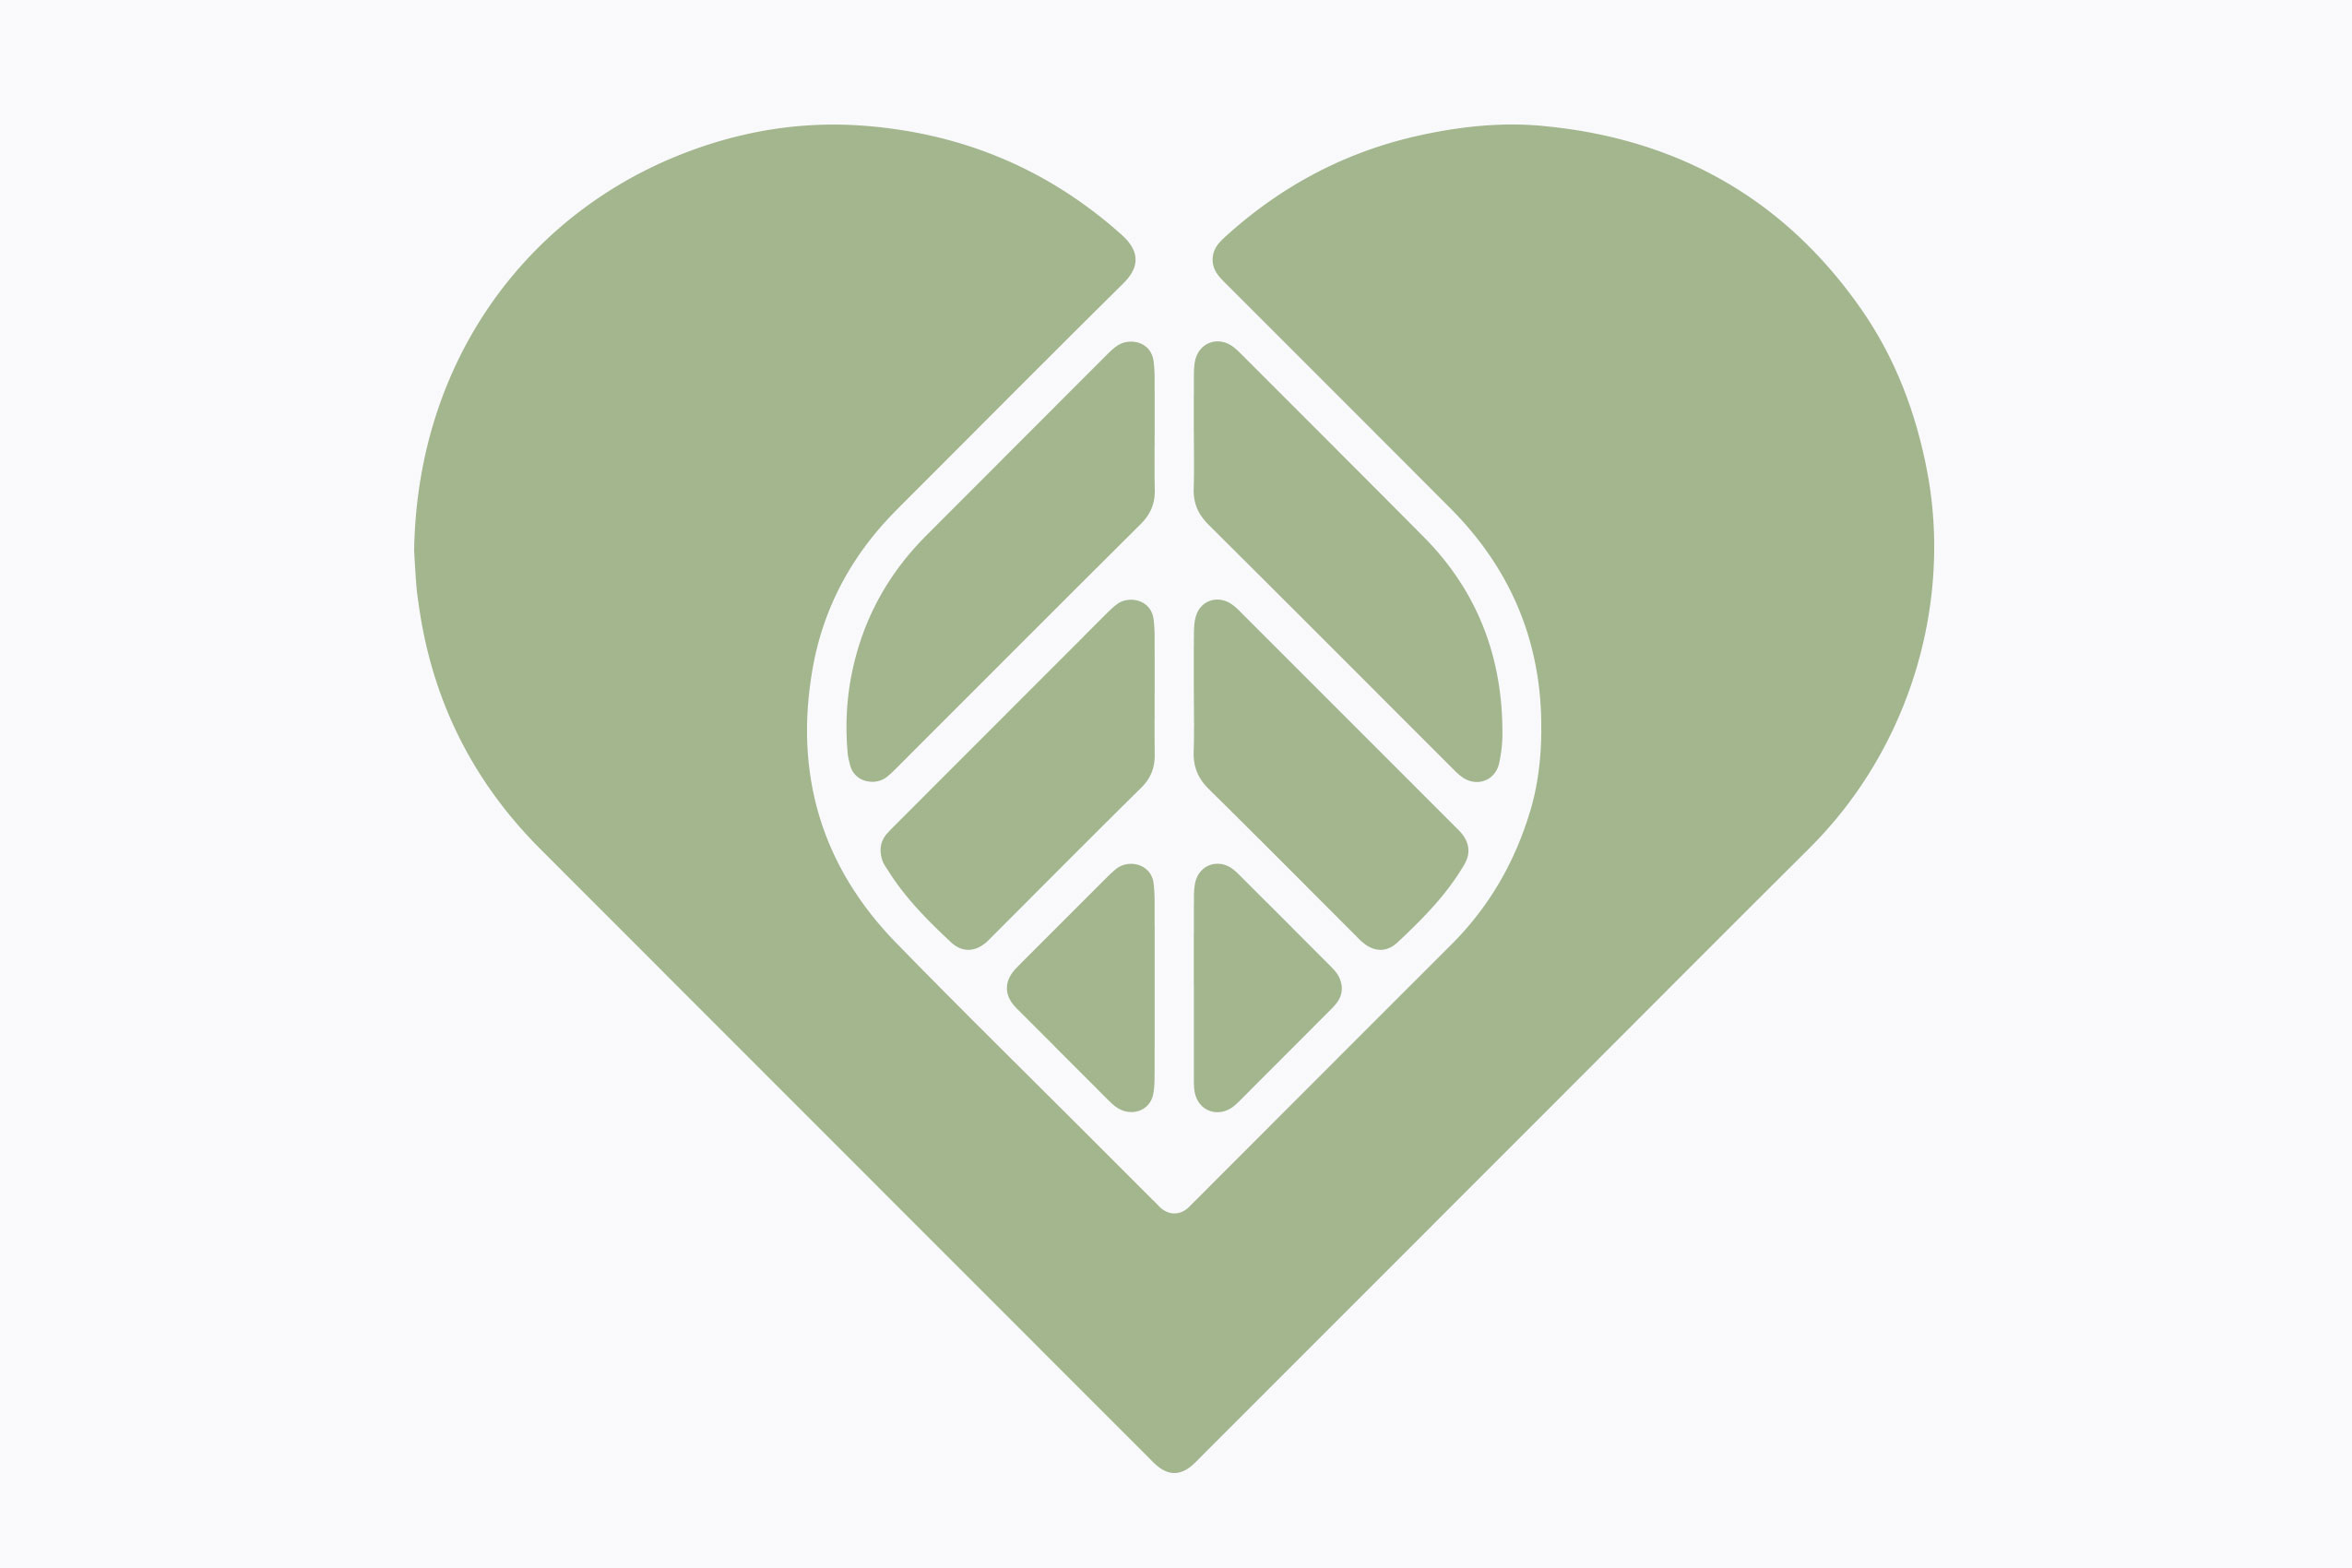 ghs-logo-leaf-green-white